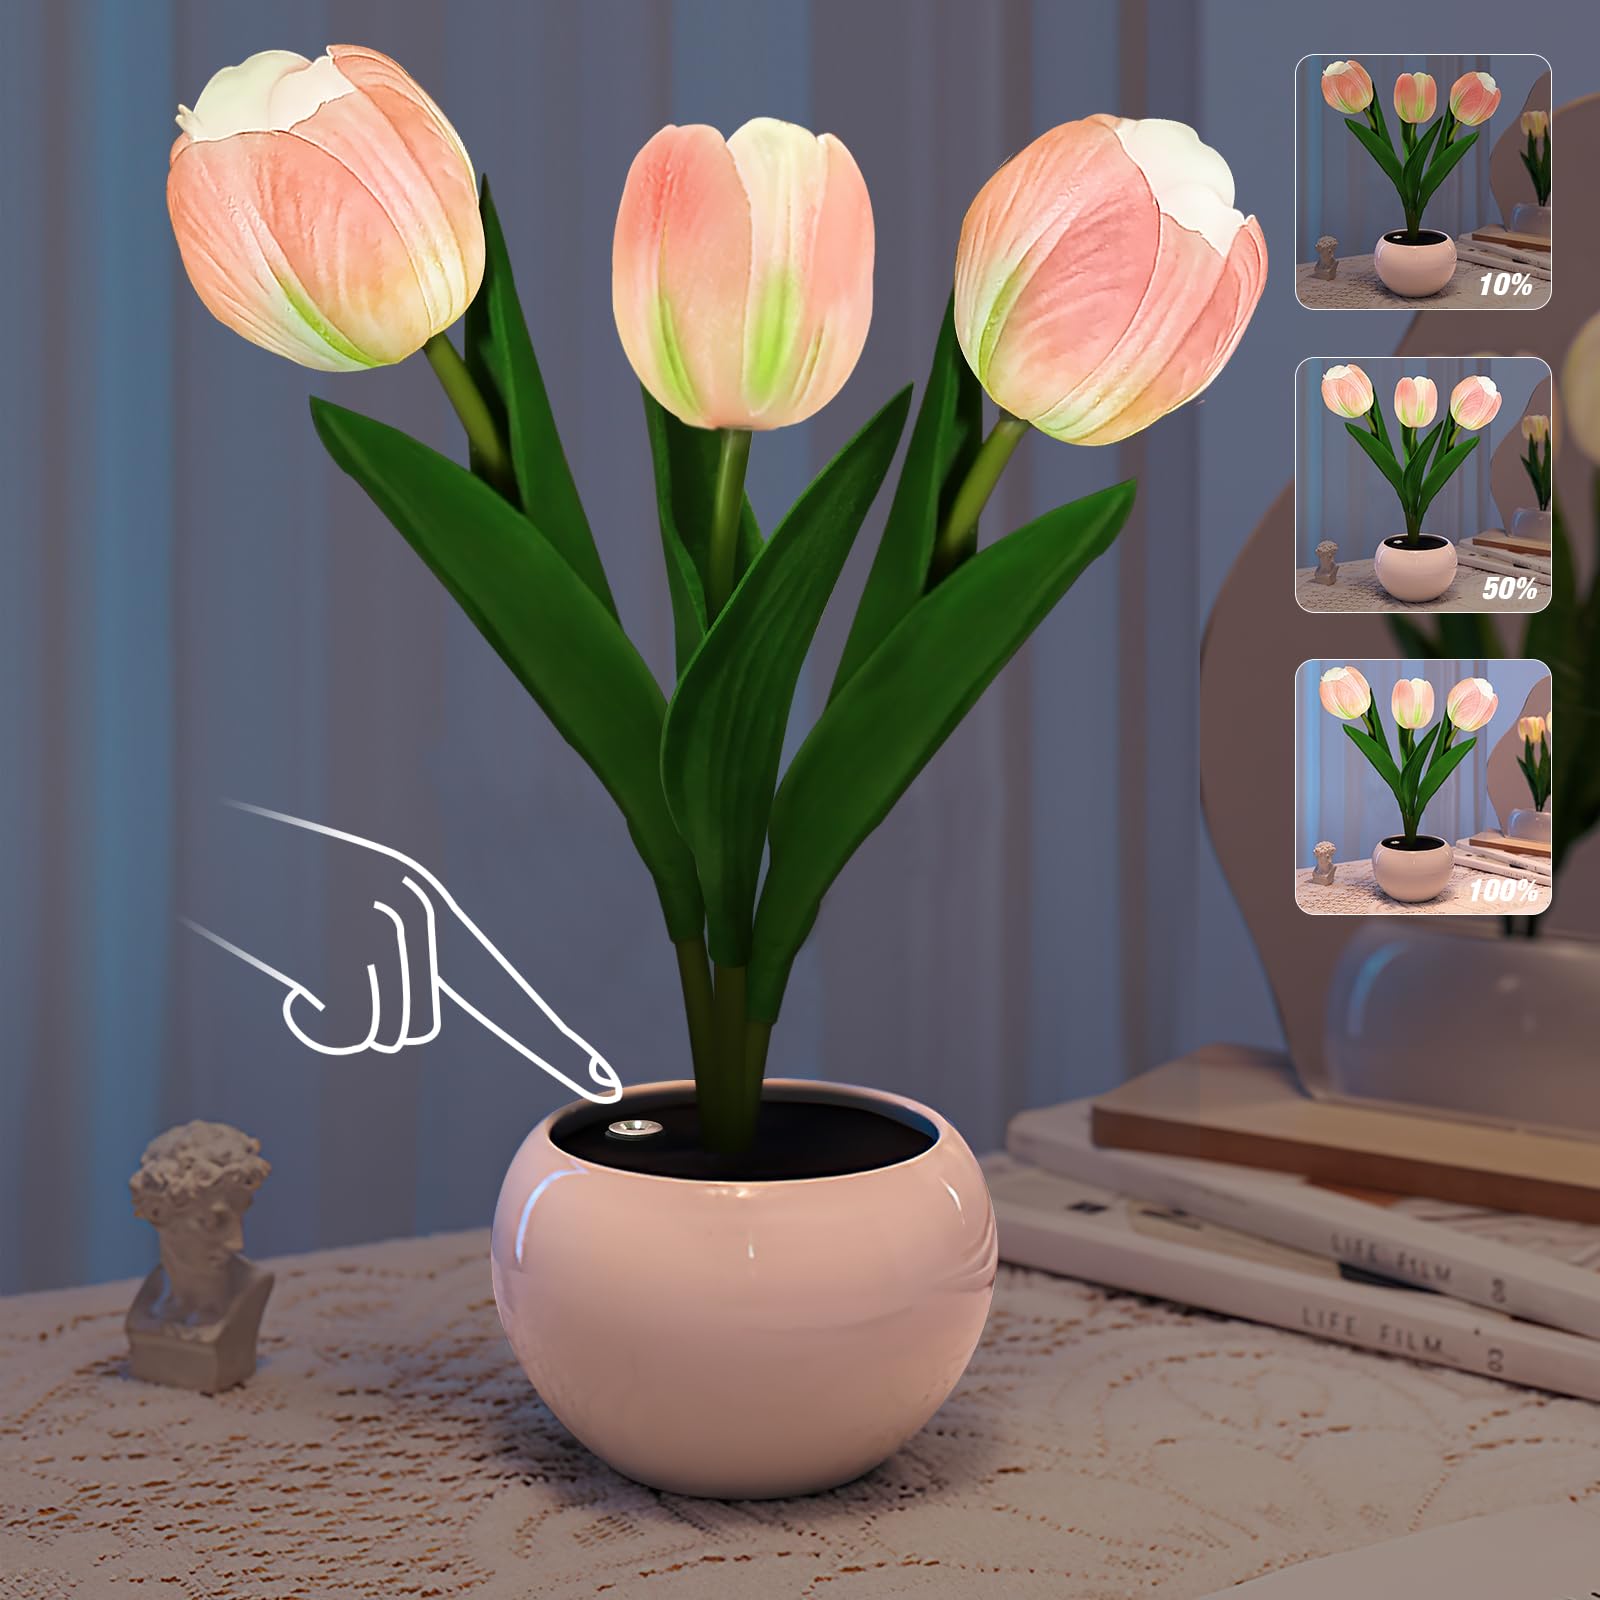 Tulip Dreamlight Table Lamp